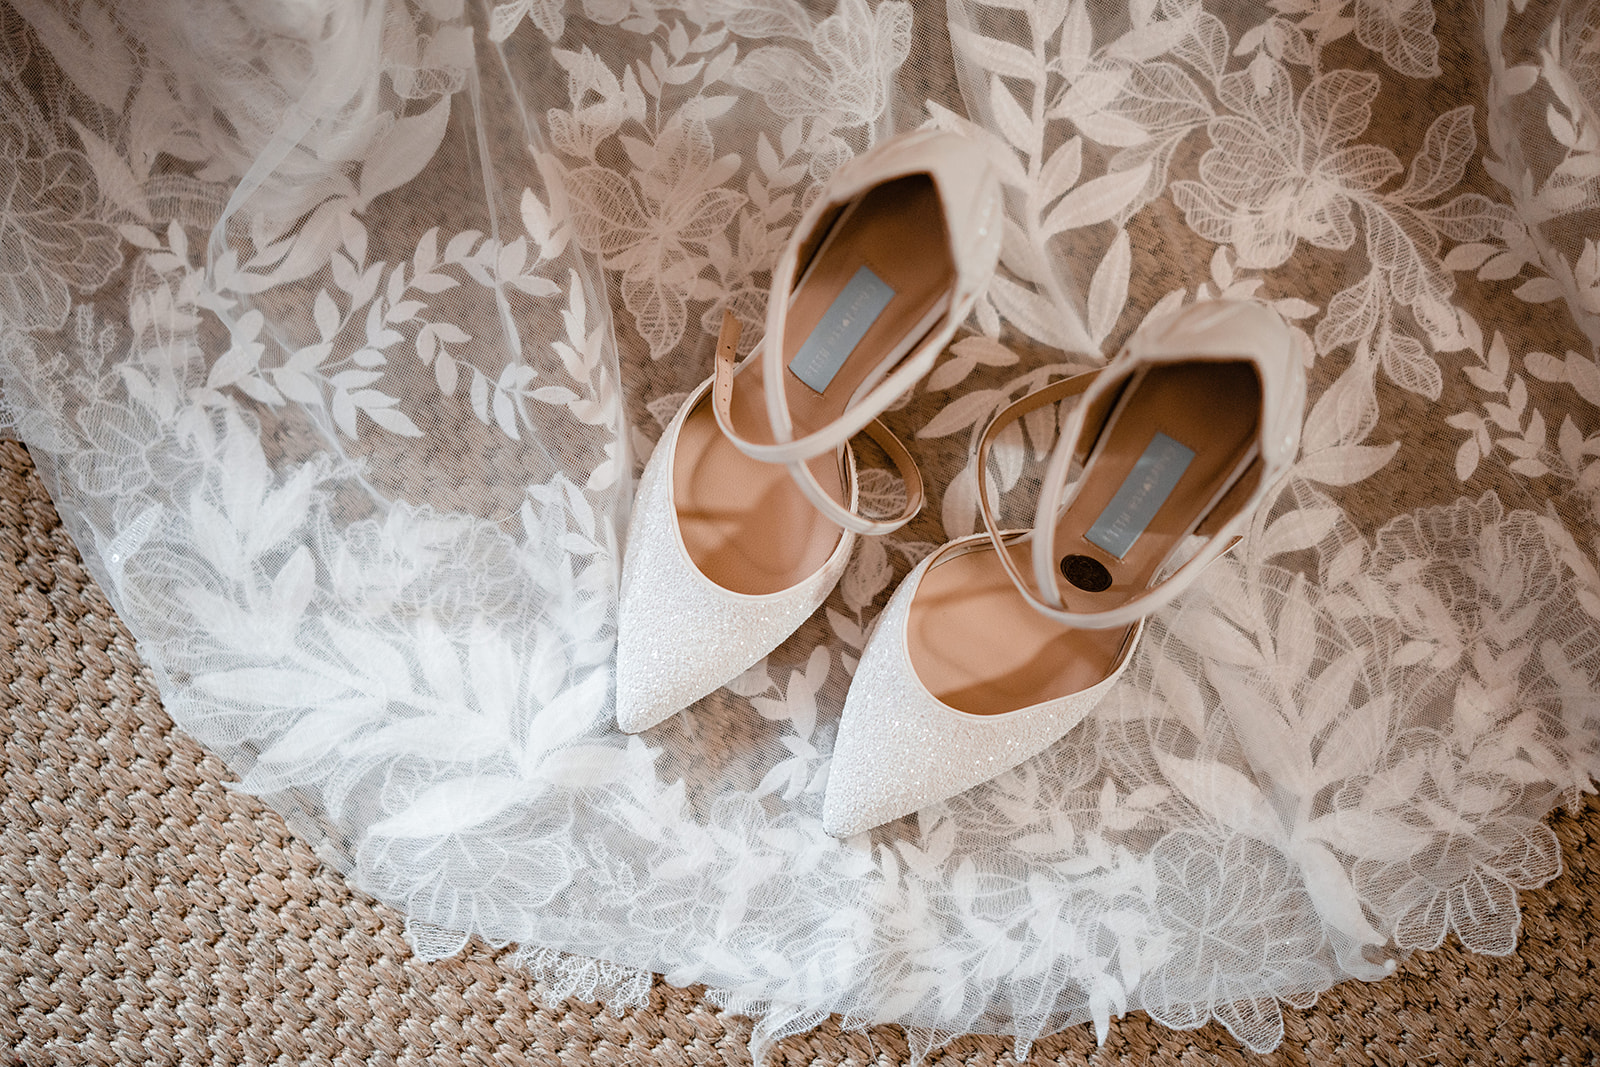 Charlotte mills wedding shoes at neidpath castle